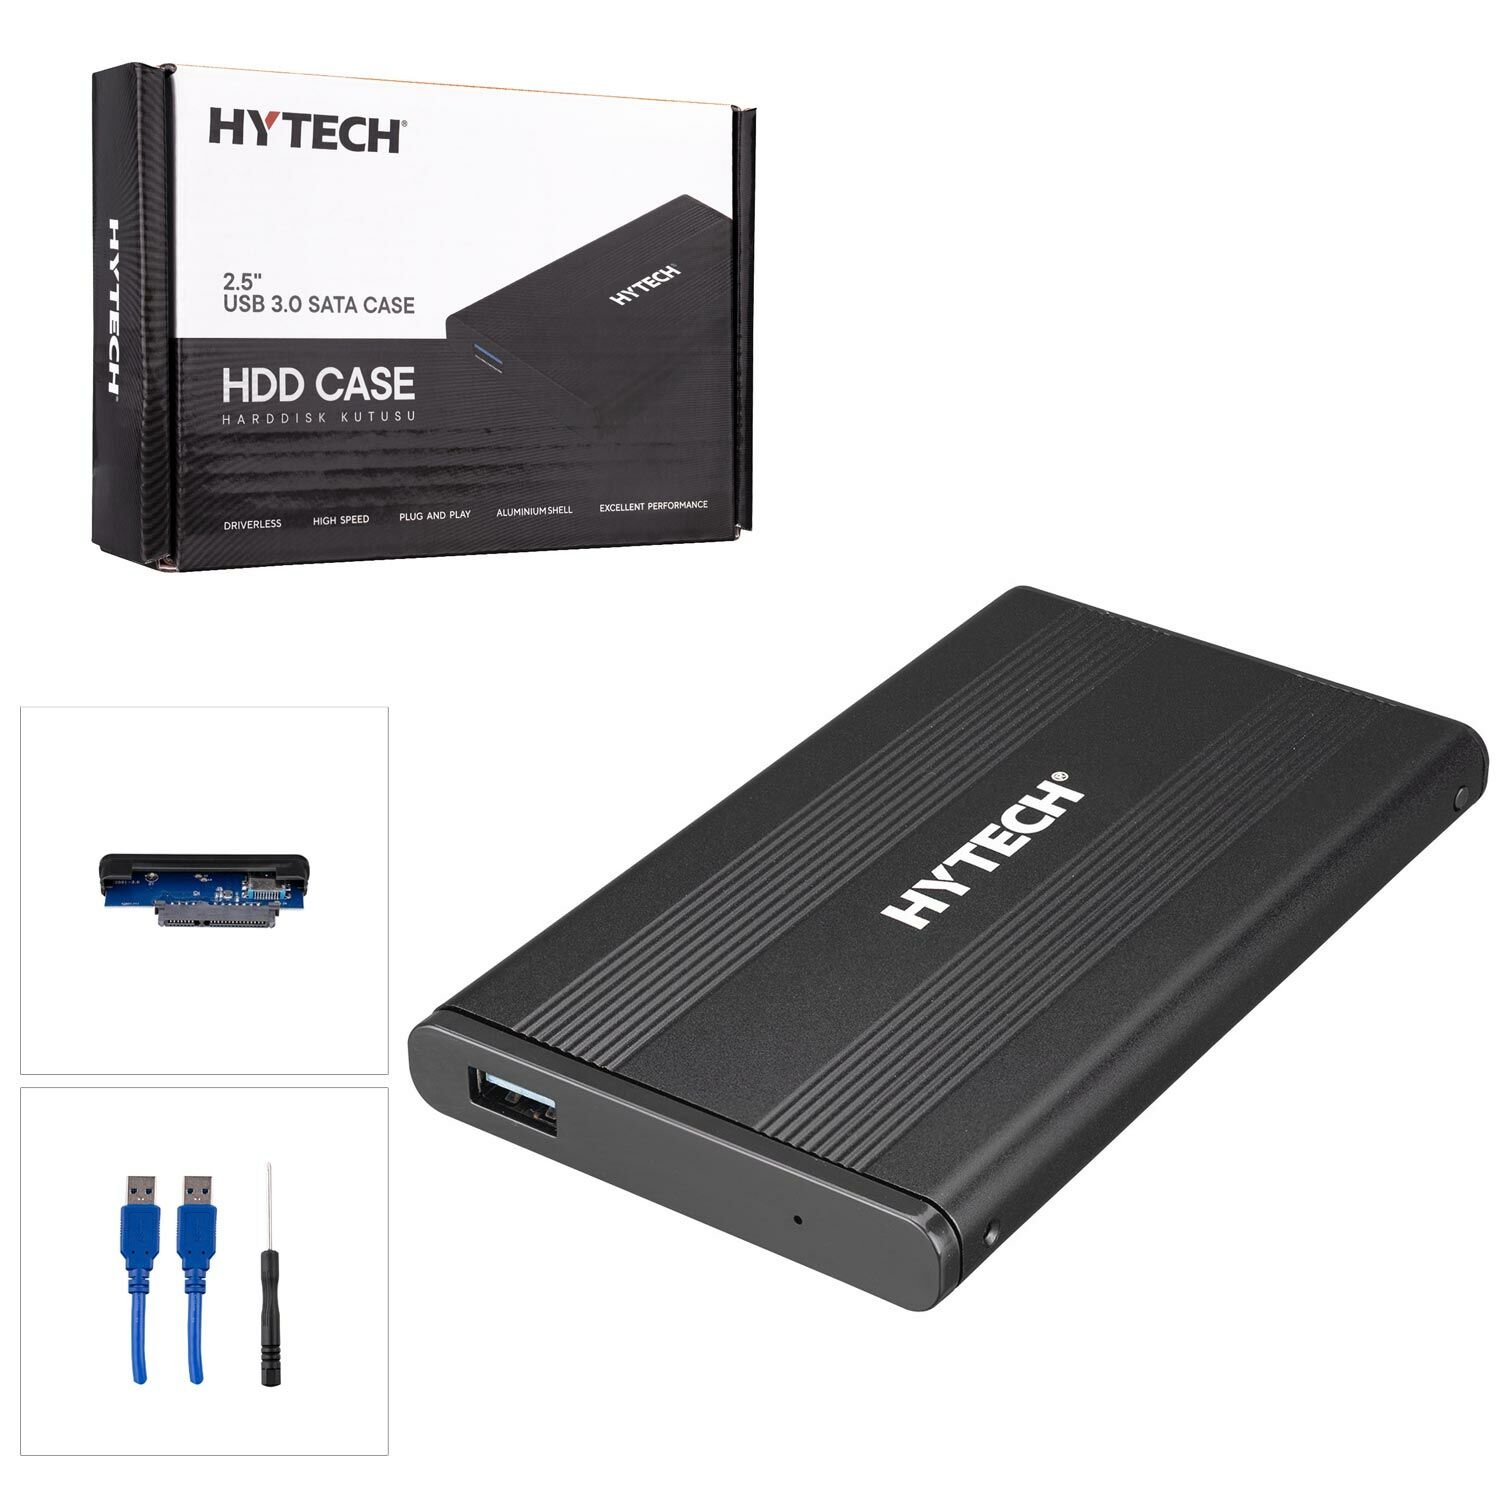 HARDDİSK KUTUSU SSD HDD 2.5 SATA USB 3.0 HYTECH HY-HDC23